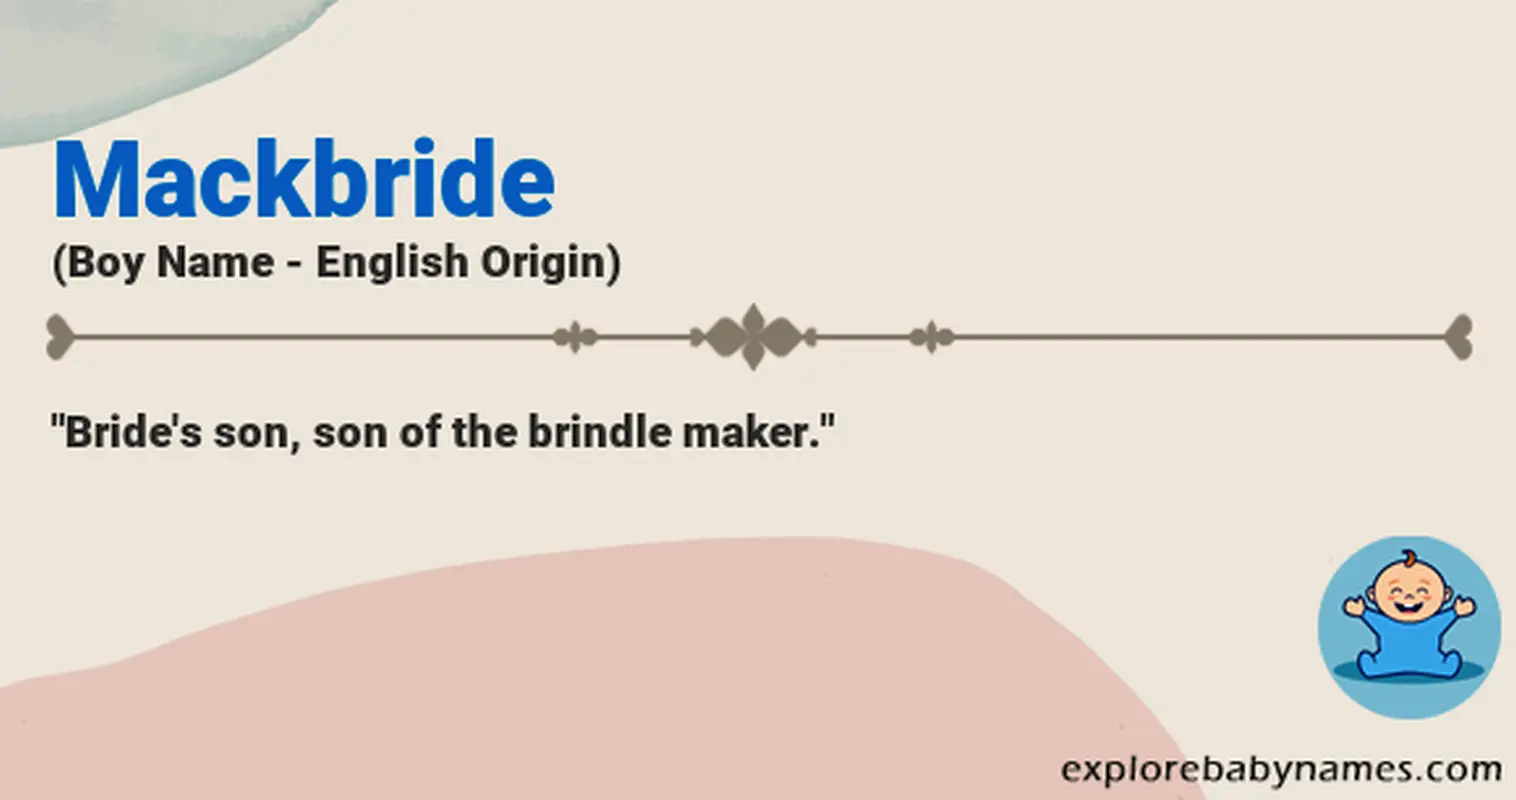 Meaning of Mackbride